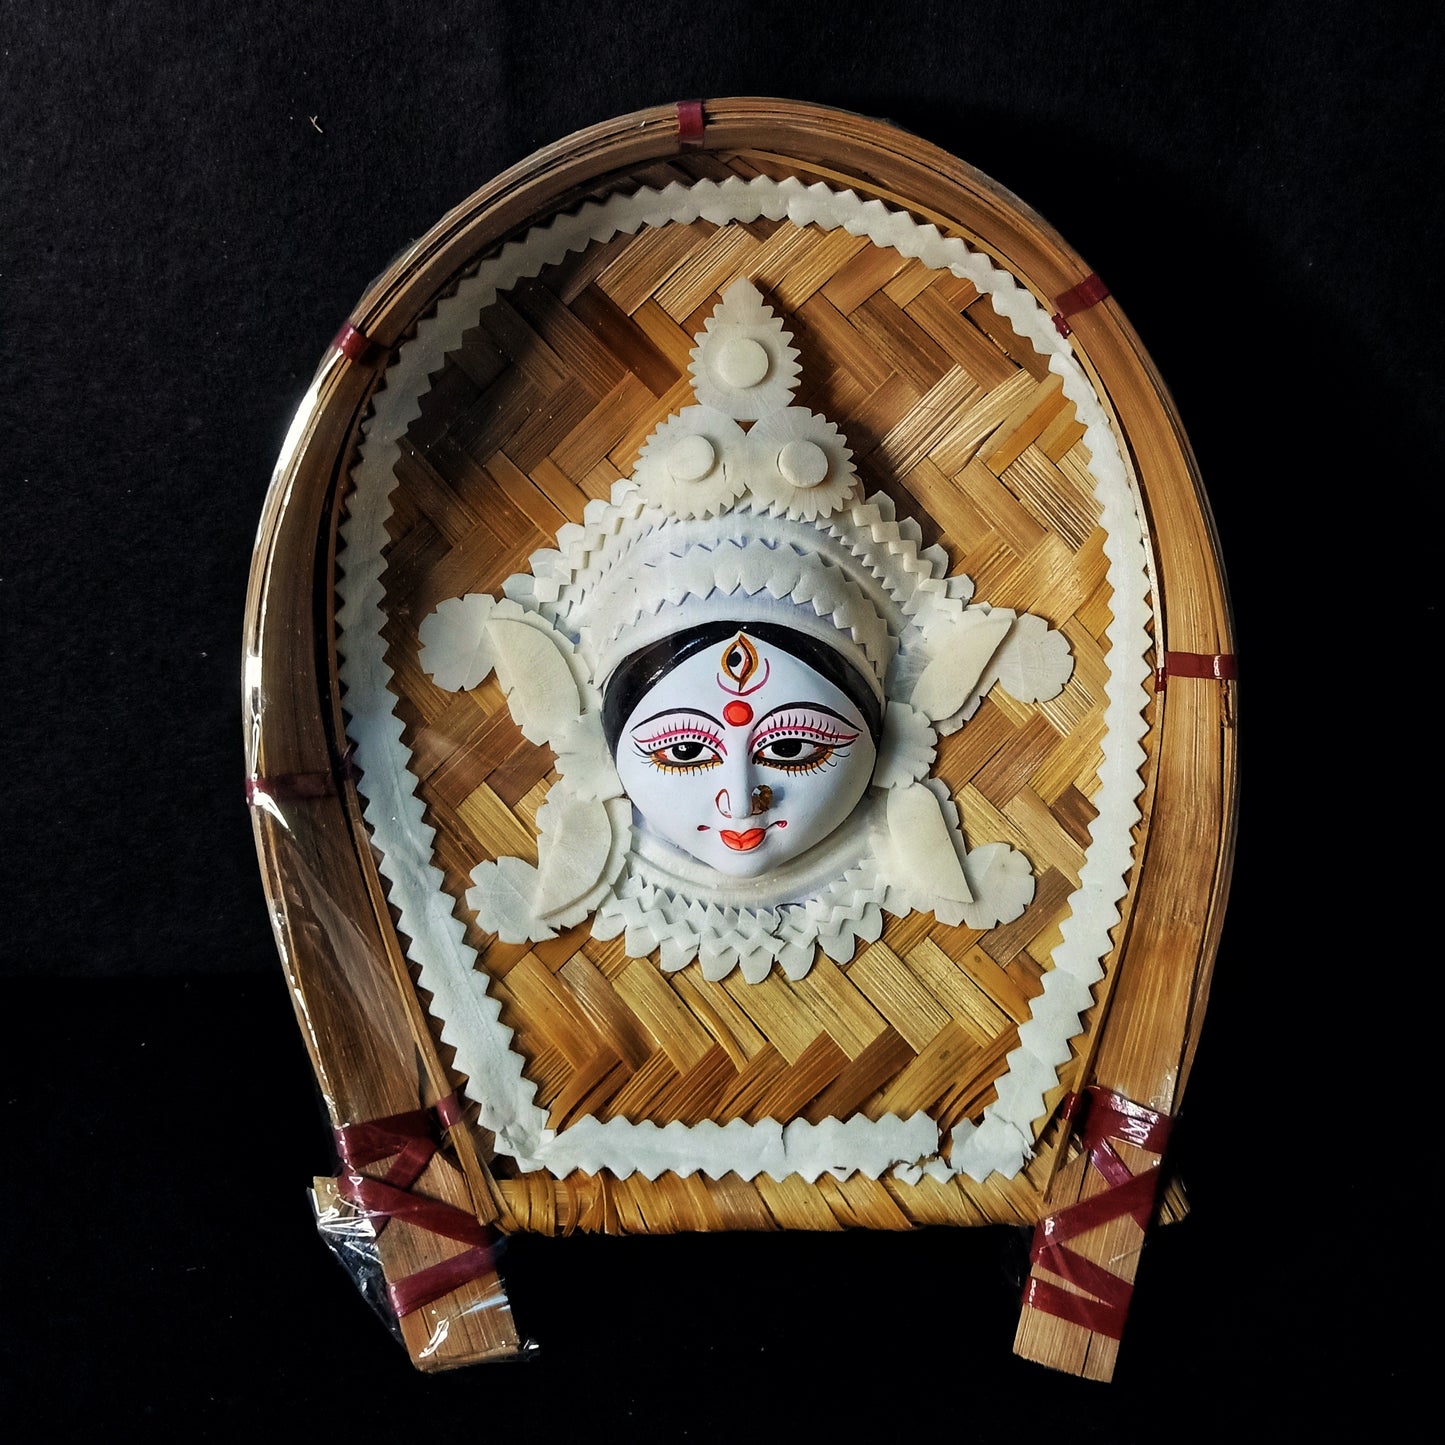 Kulo Durga Small